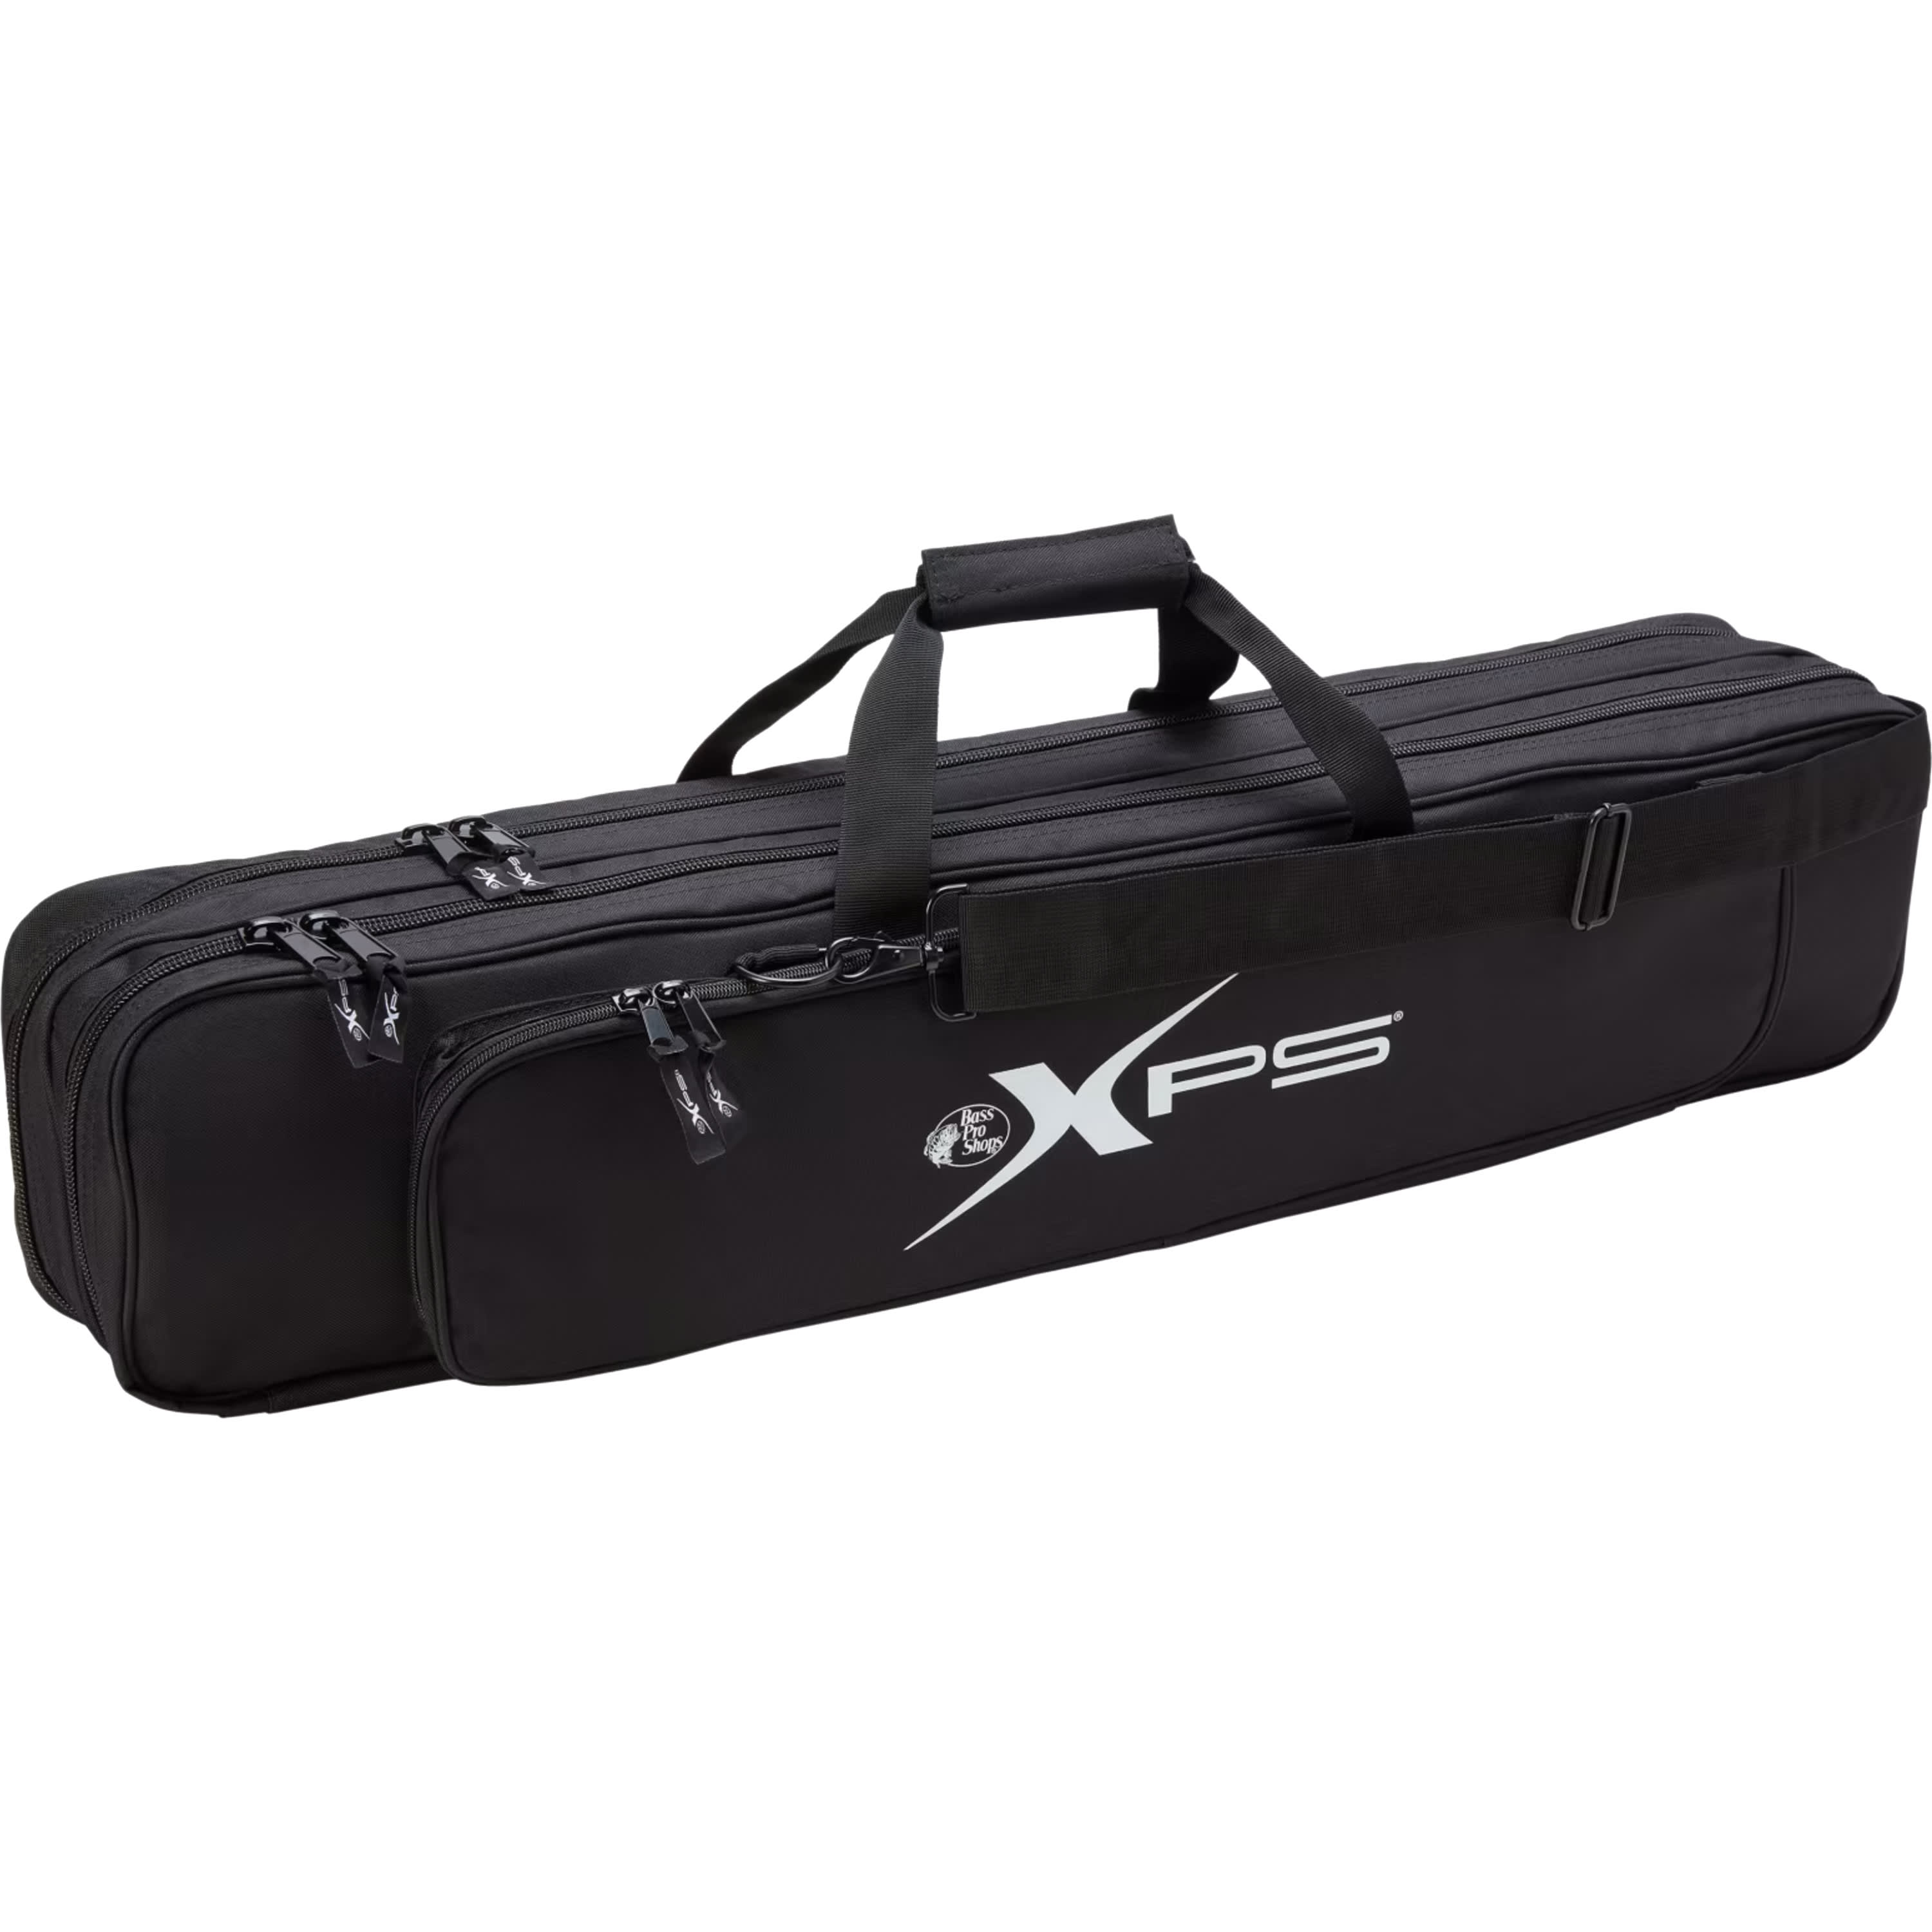 Bass Pro Shops XPS Deluxe Eight-Rod Ice-Rod Bag - Cabelas - XPS 